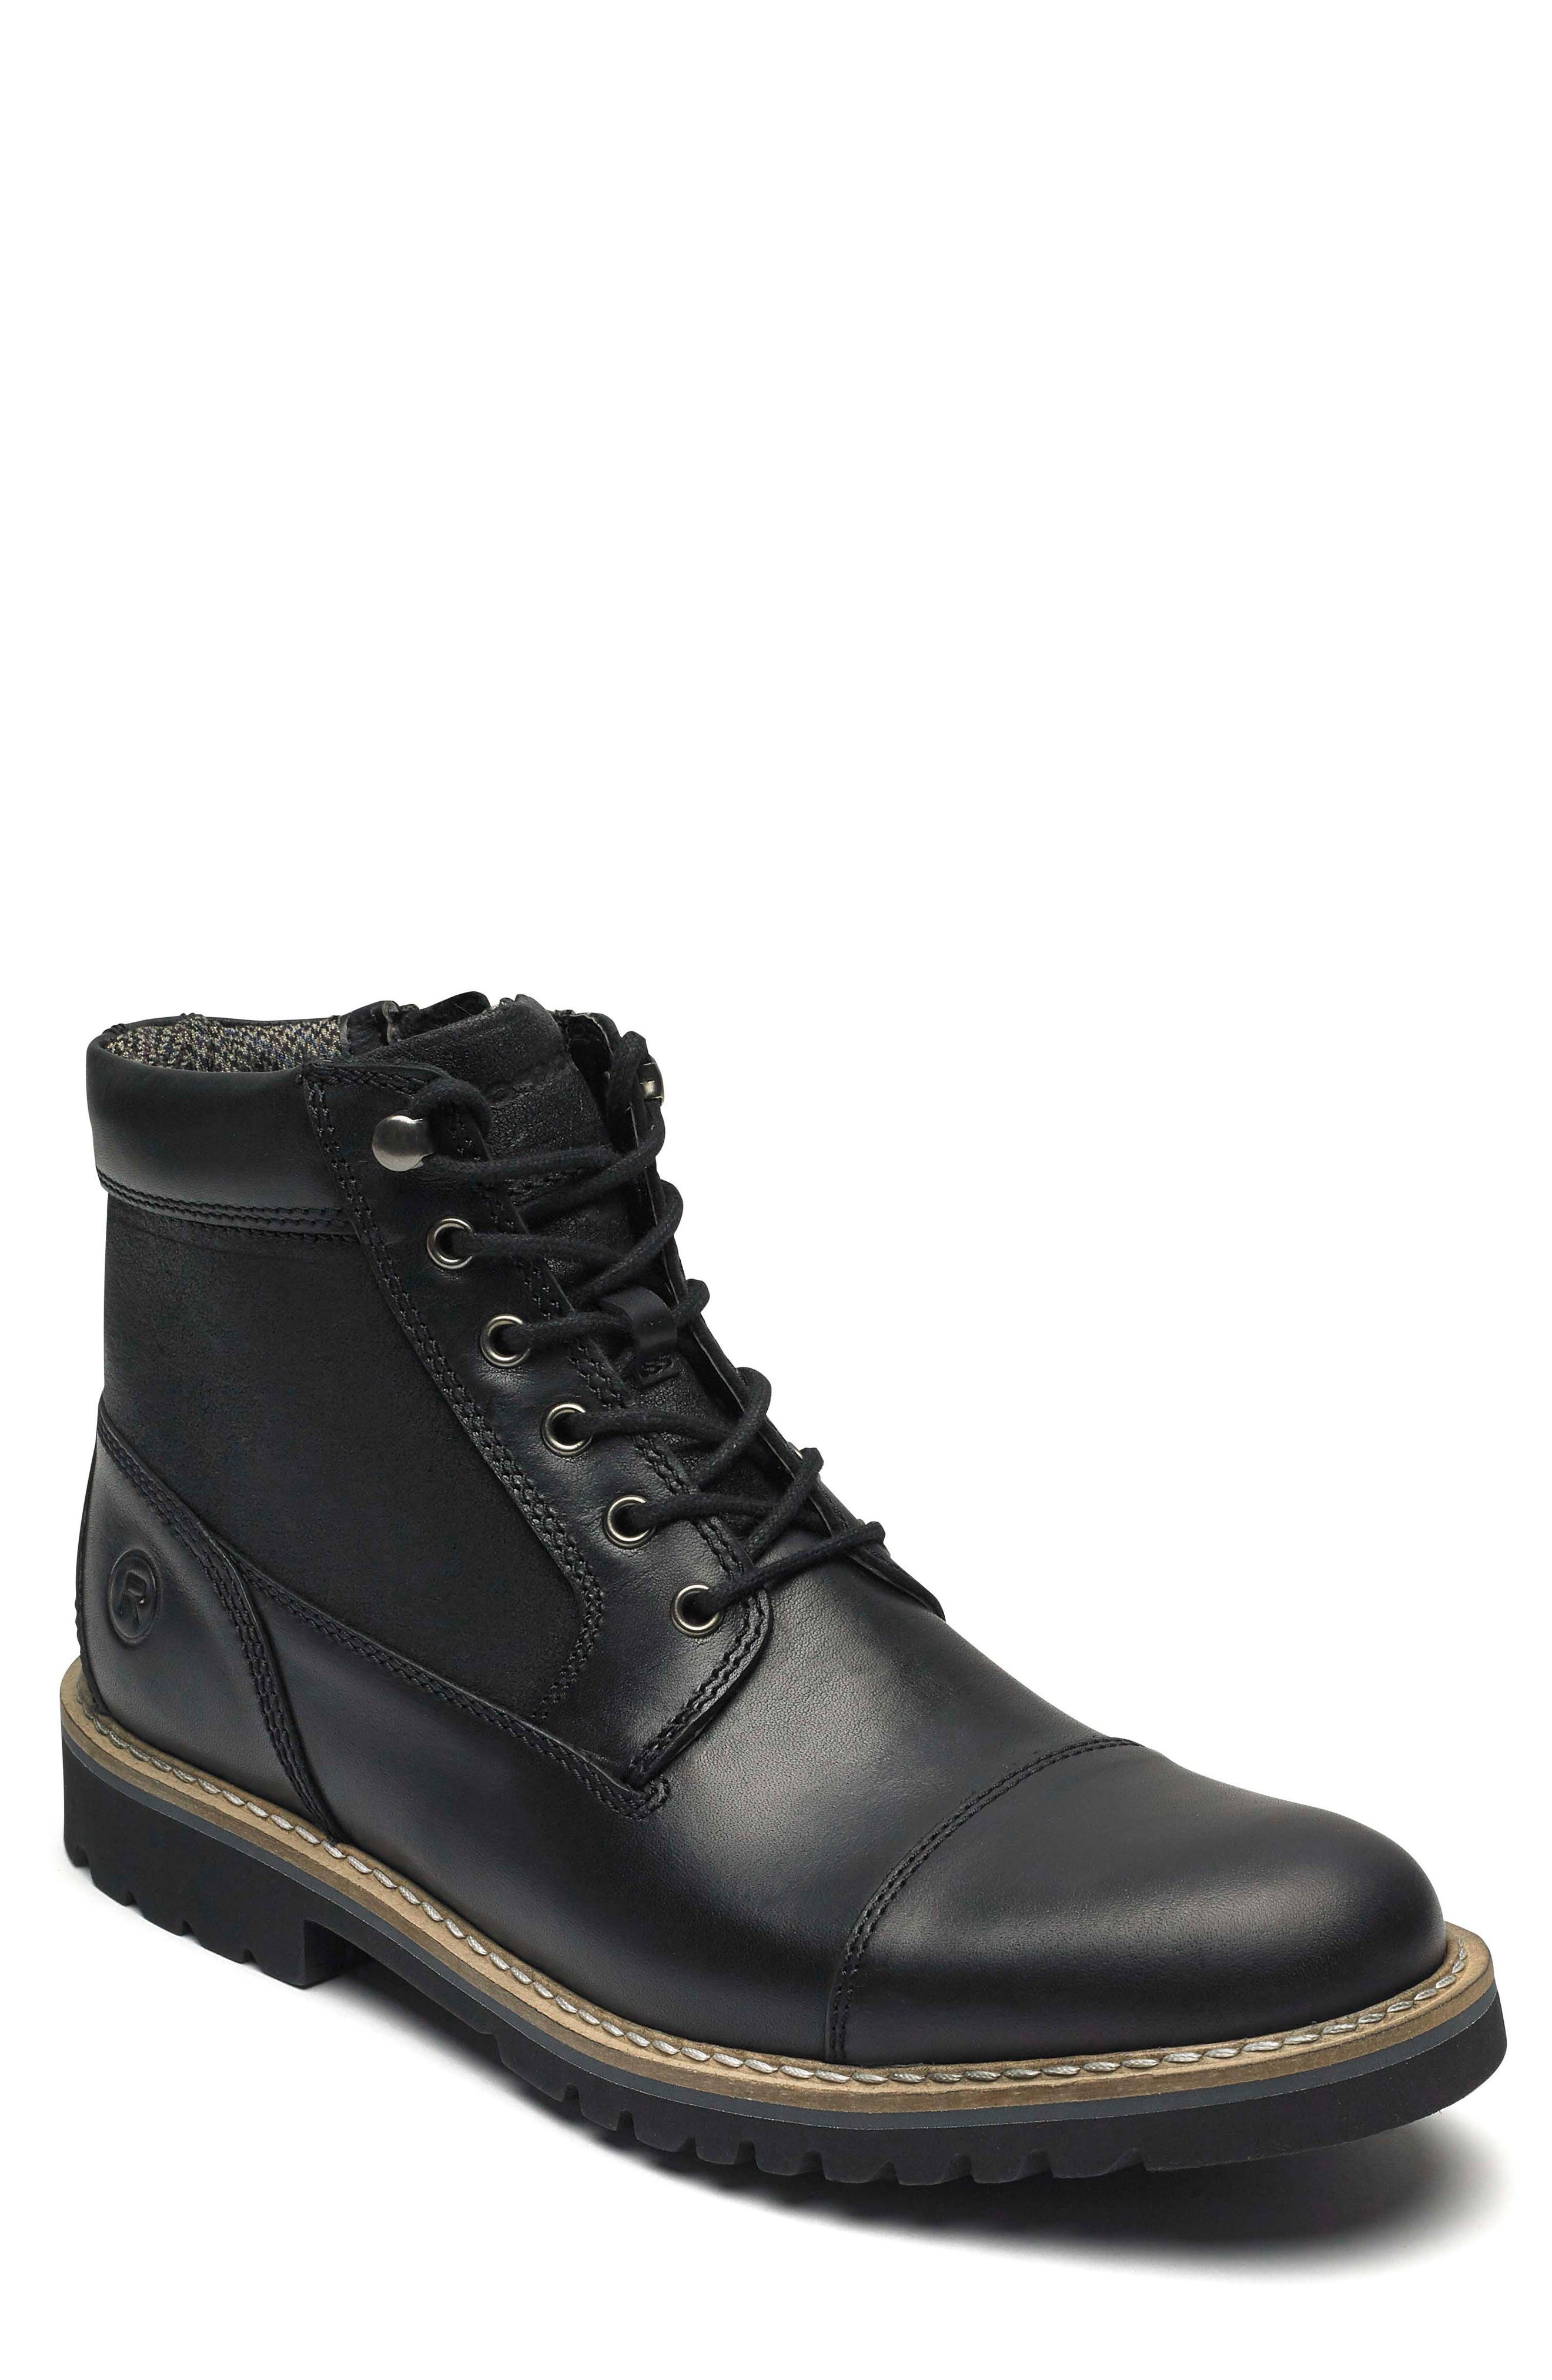 rockport sp3 leather chukka boots